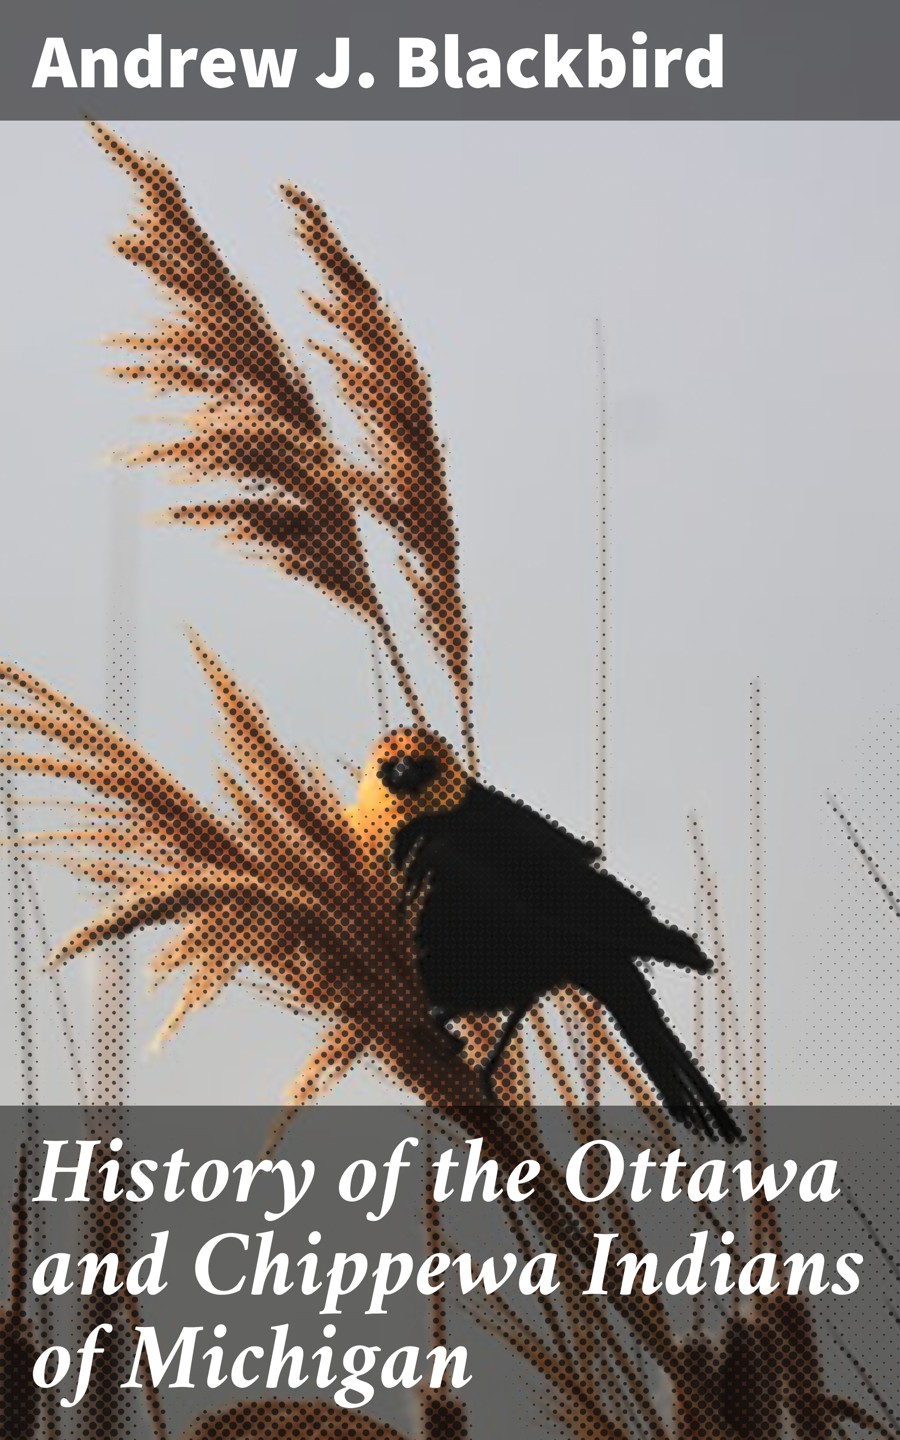 Andrew J. Blackbird History of the Ottawa and Chippewa Indians of Michigan